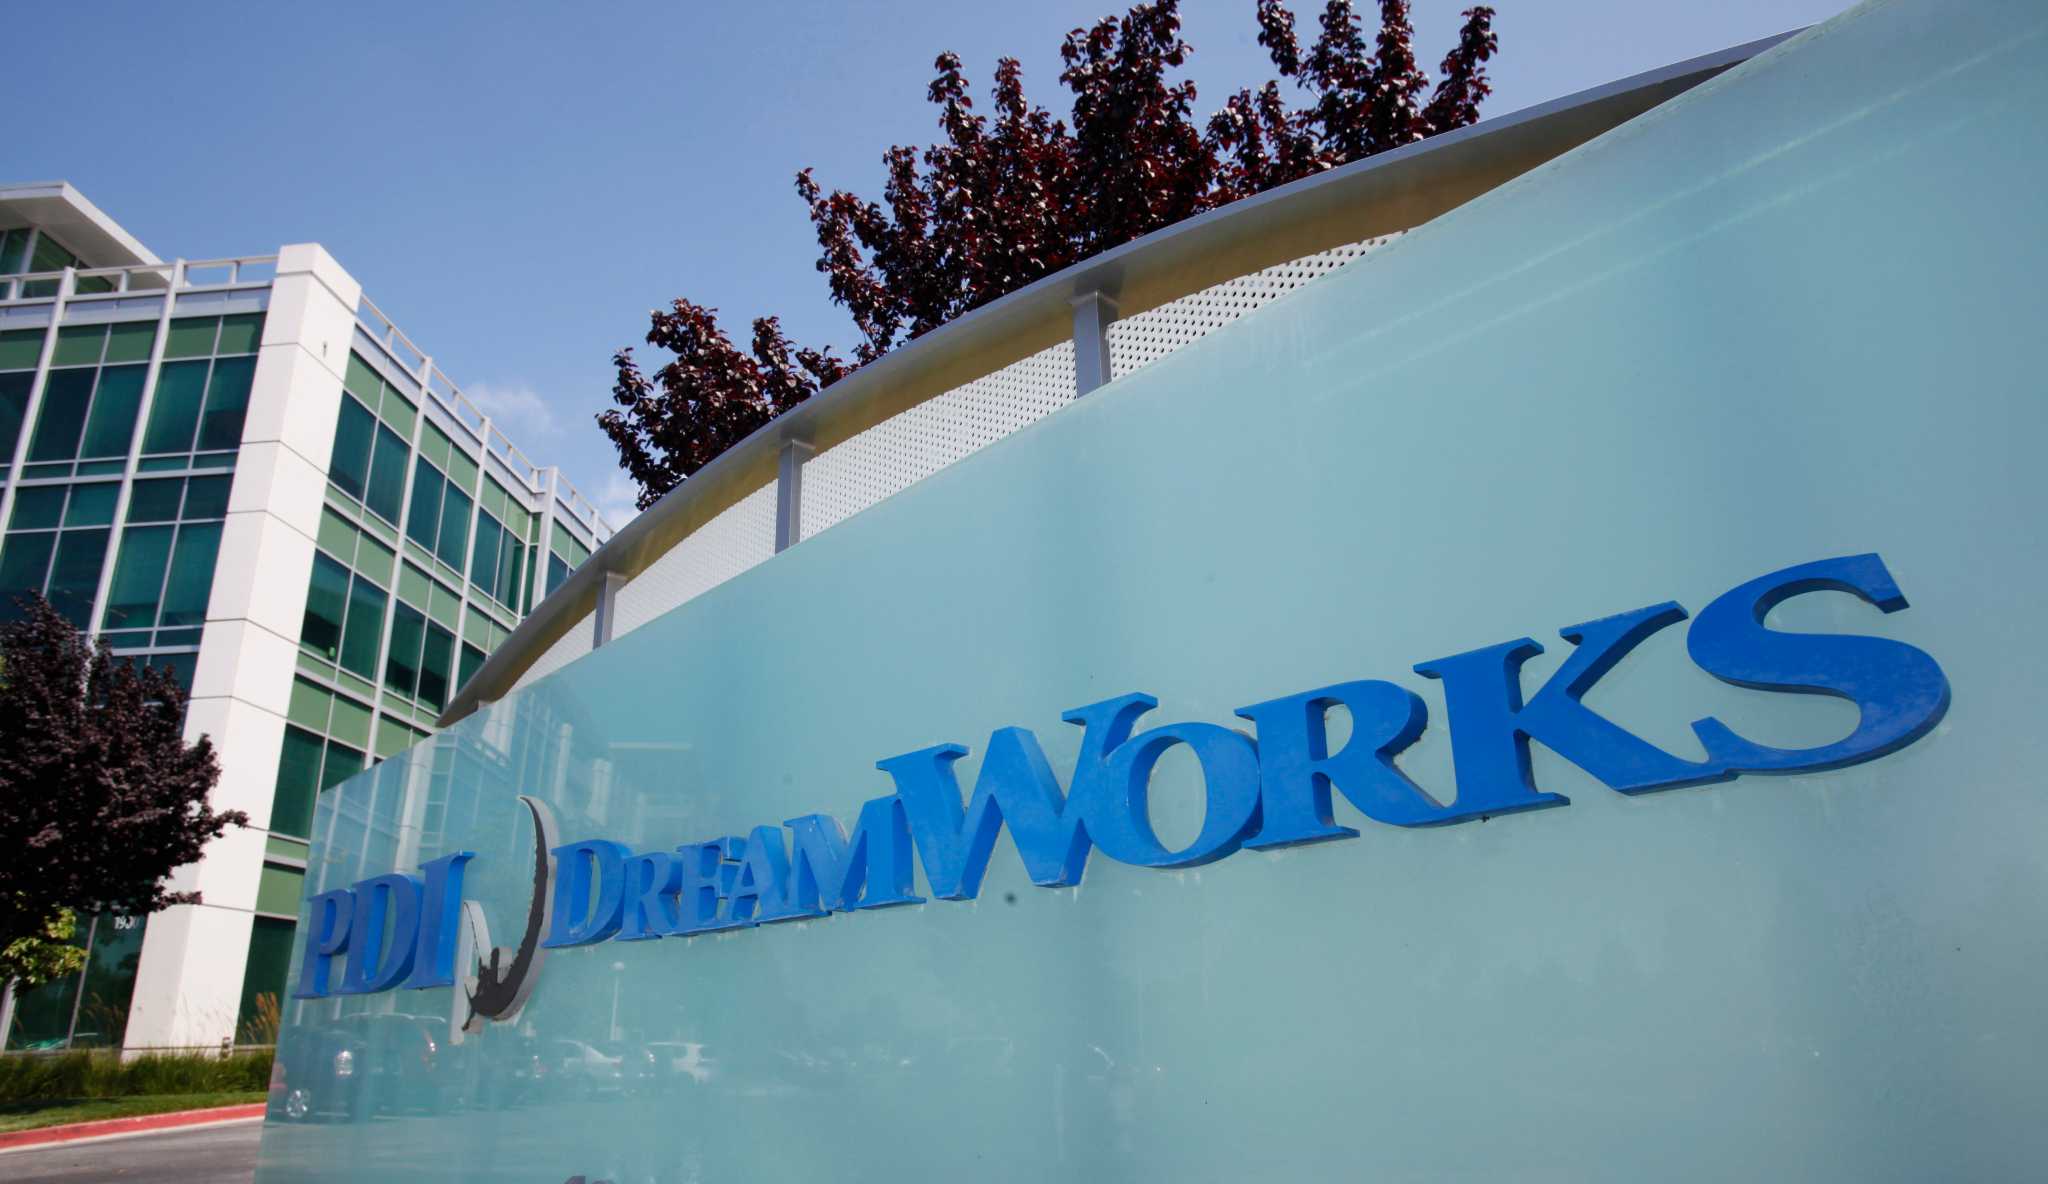 PDI DreamWorks Logo - DreamWorks Animation to cut 500 jobs, PDI gets hit hard